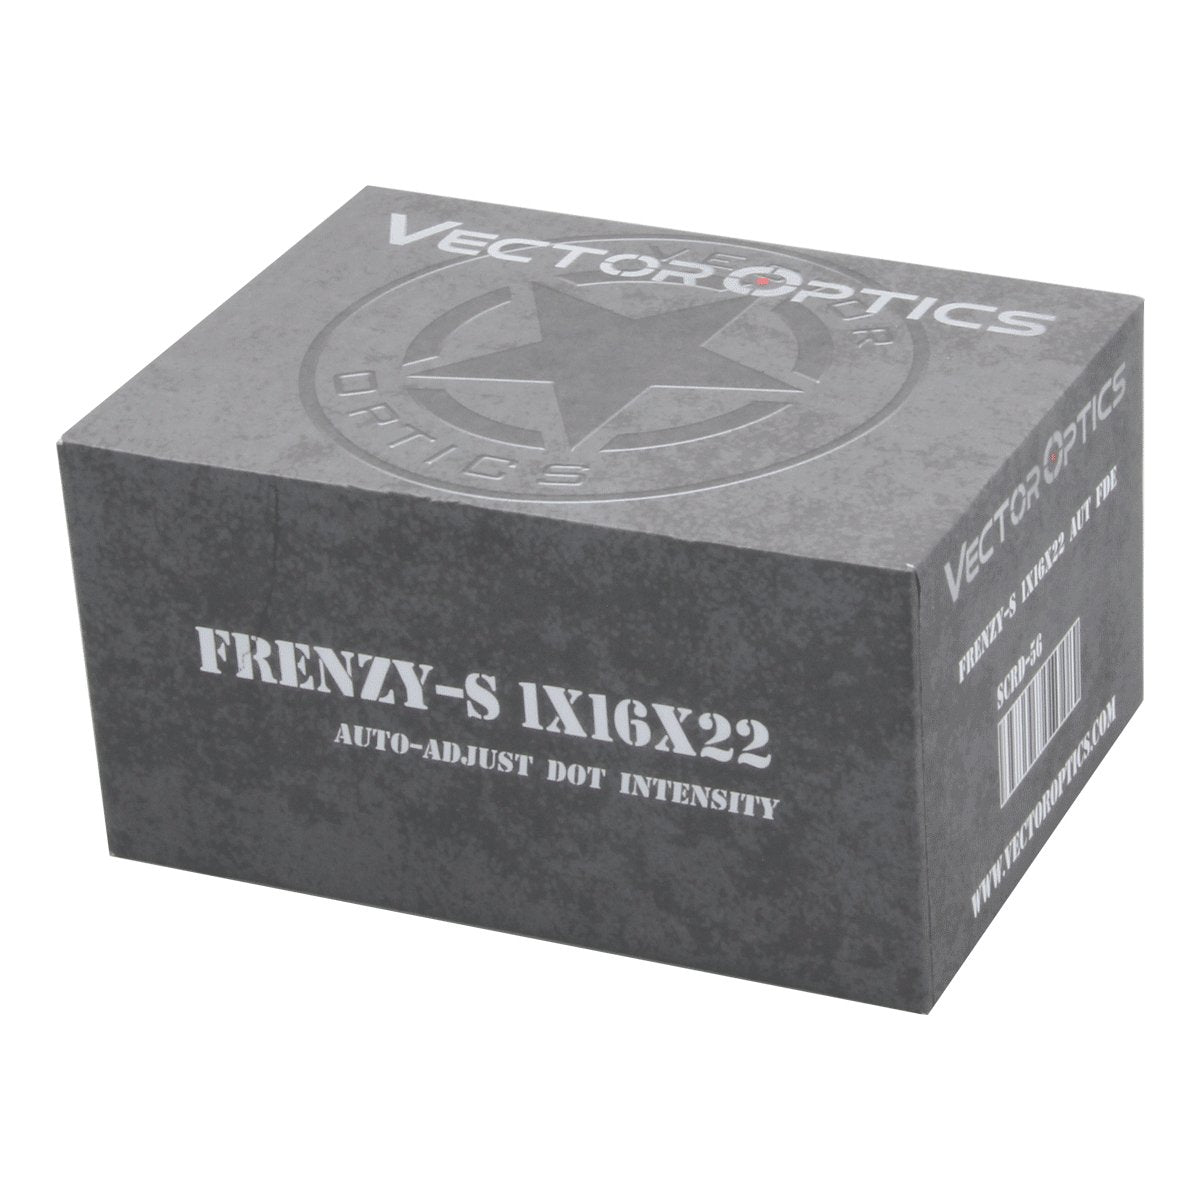 Frenzy-S 1x16x22 AUT FDE- Vector Optics - Vector Optics US Online 